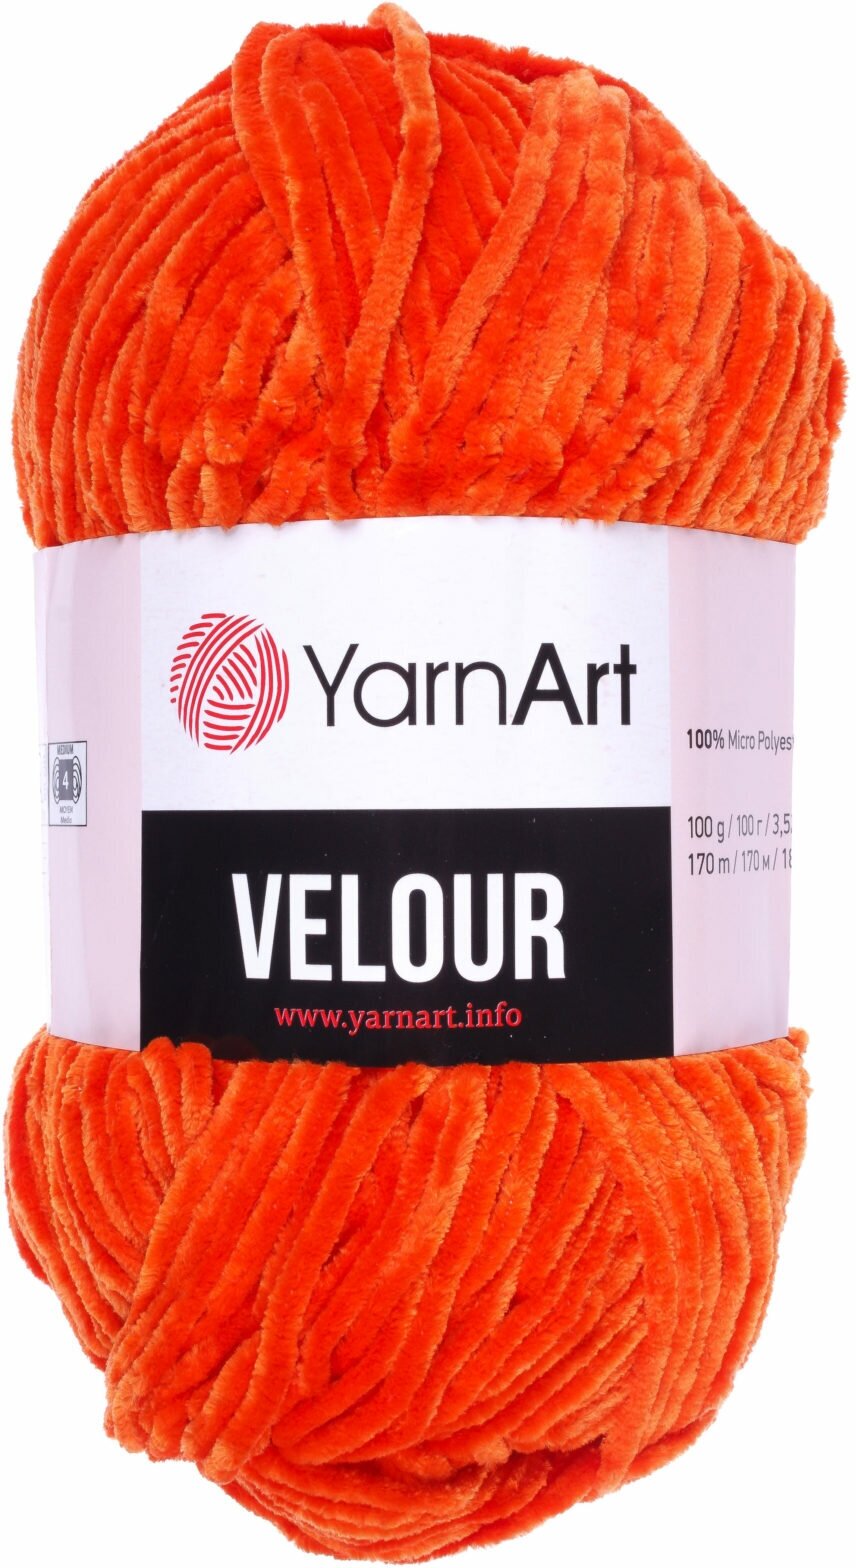 Пряжа YarnArt Velour рыжий (865), 100%микрополиэстер, 170м, 100г, 1шт